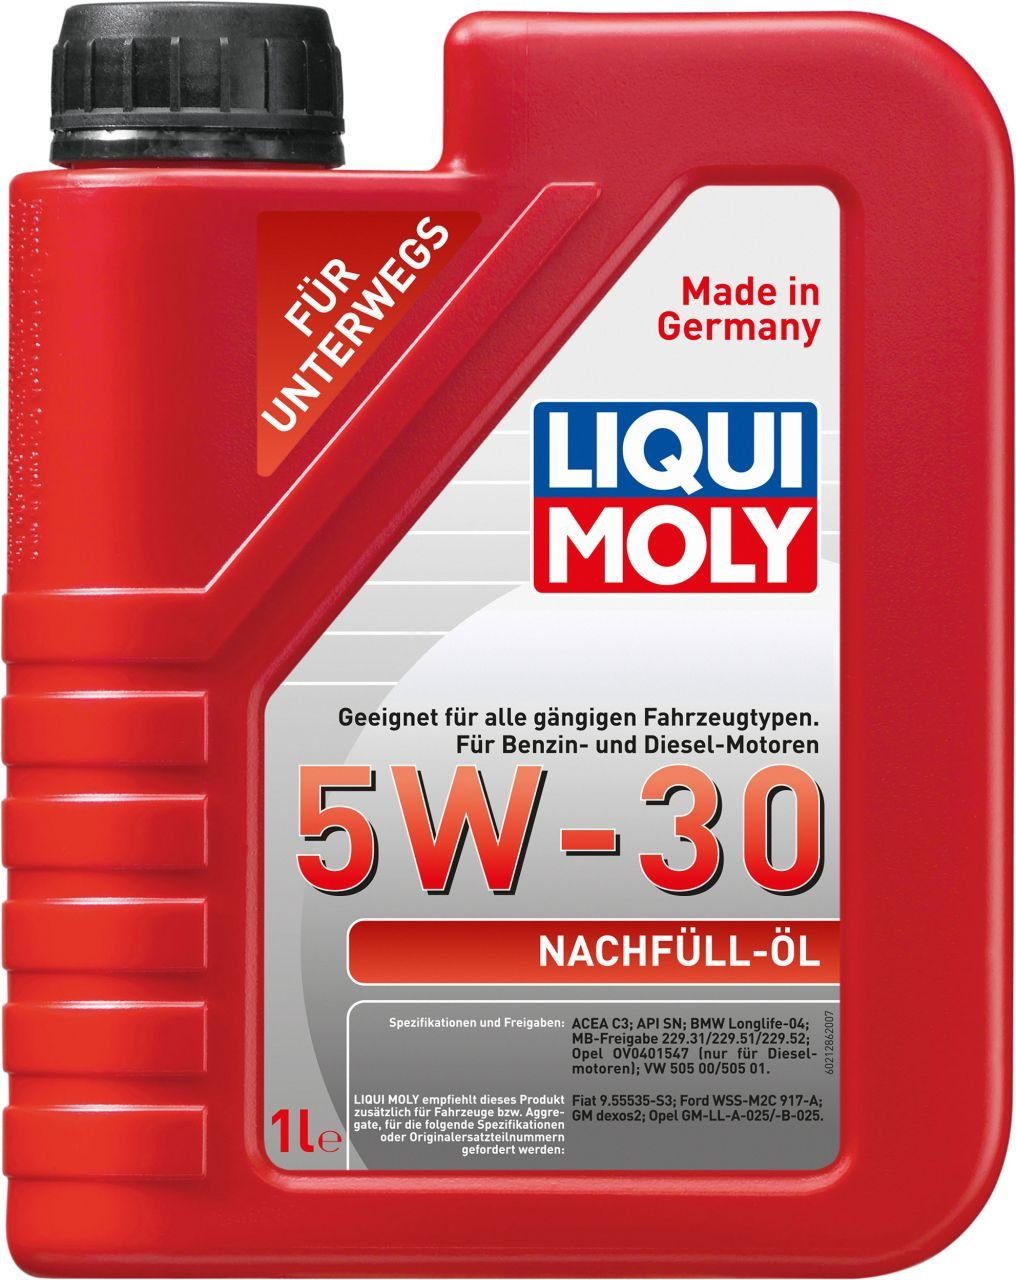 Liqui Moly Universalöl Liqui Moly Nachfüll-Öl 5W-30 1 L